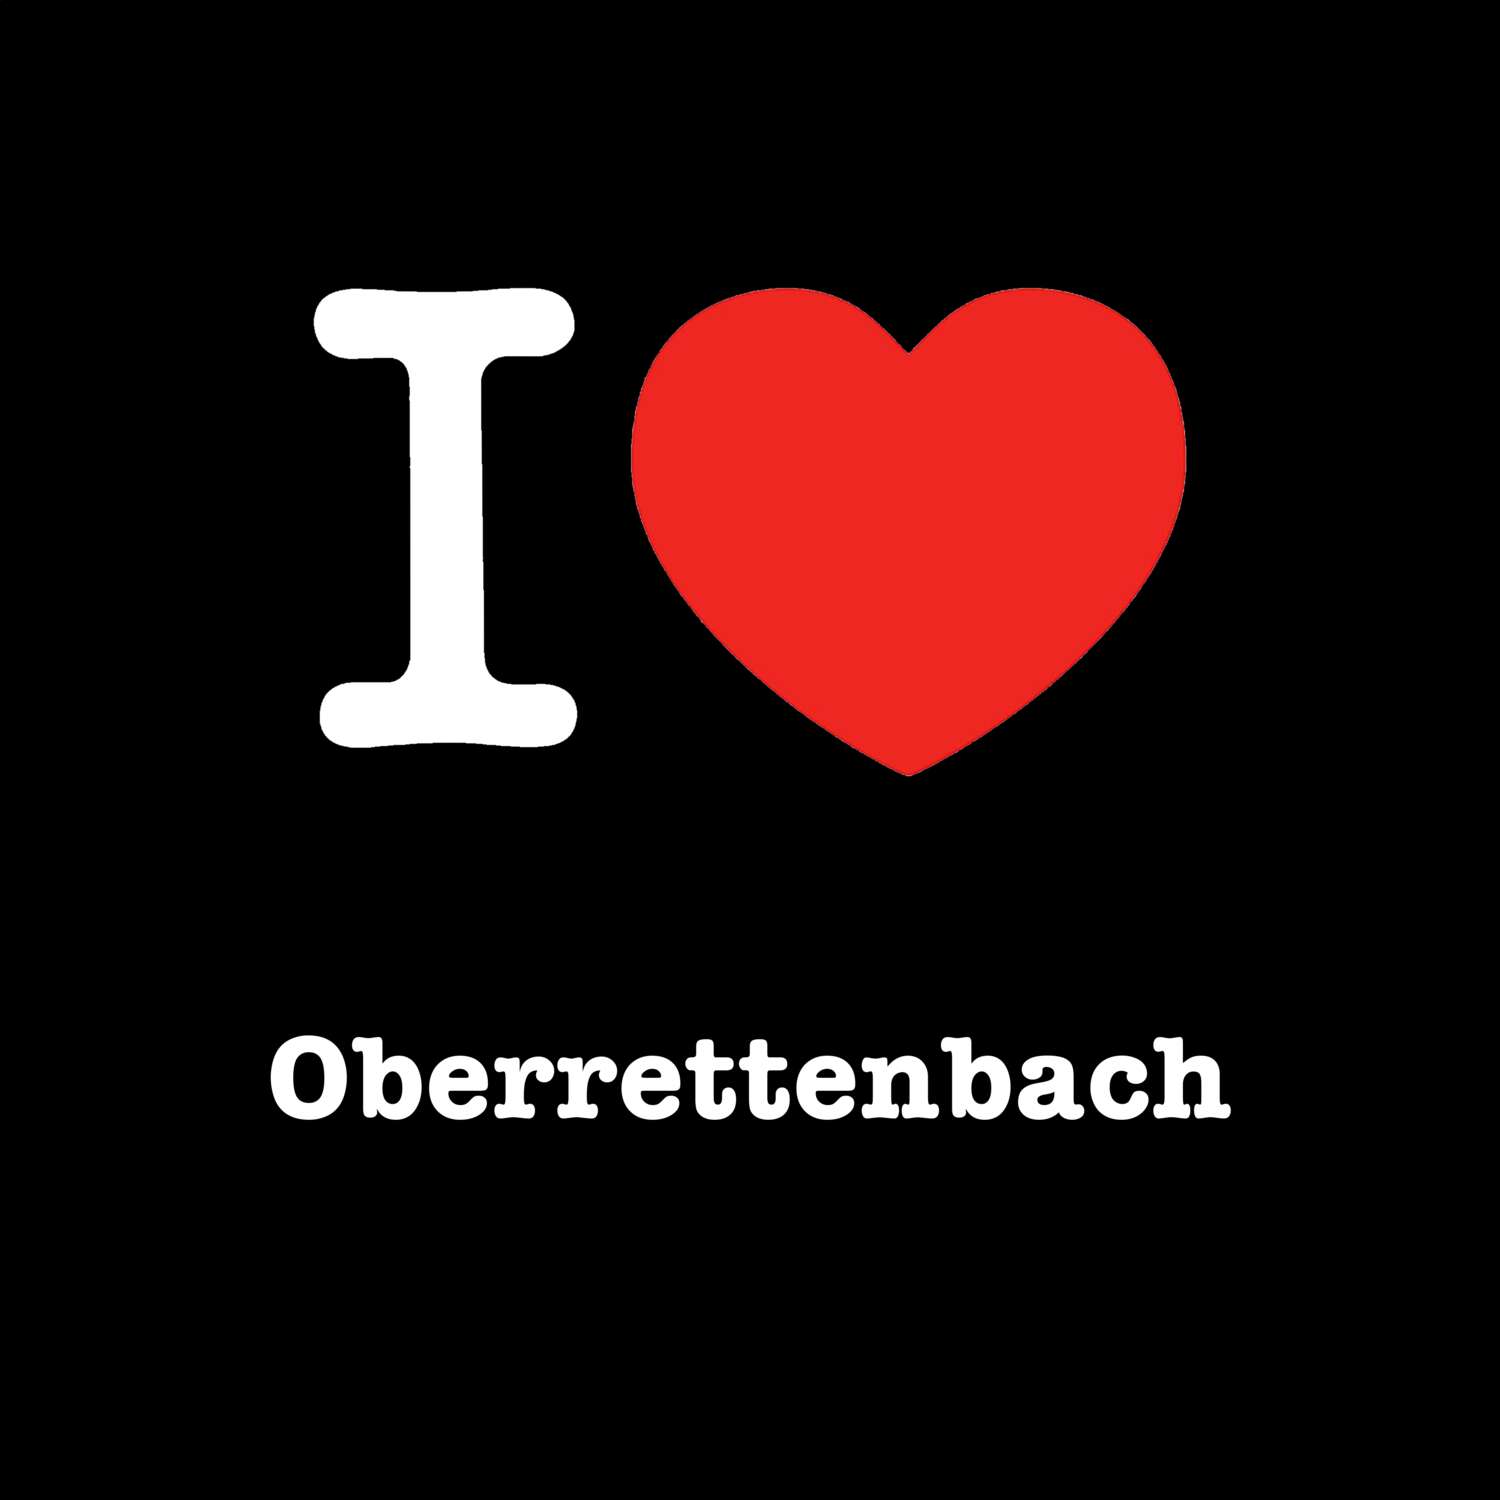 Oberrettenbach T-Shirt »I love«